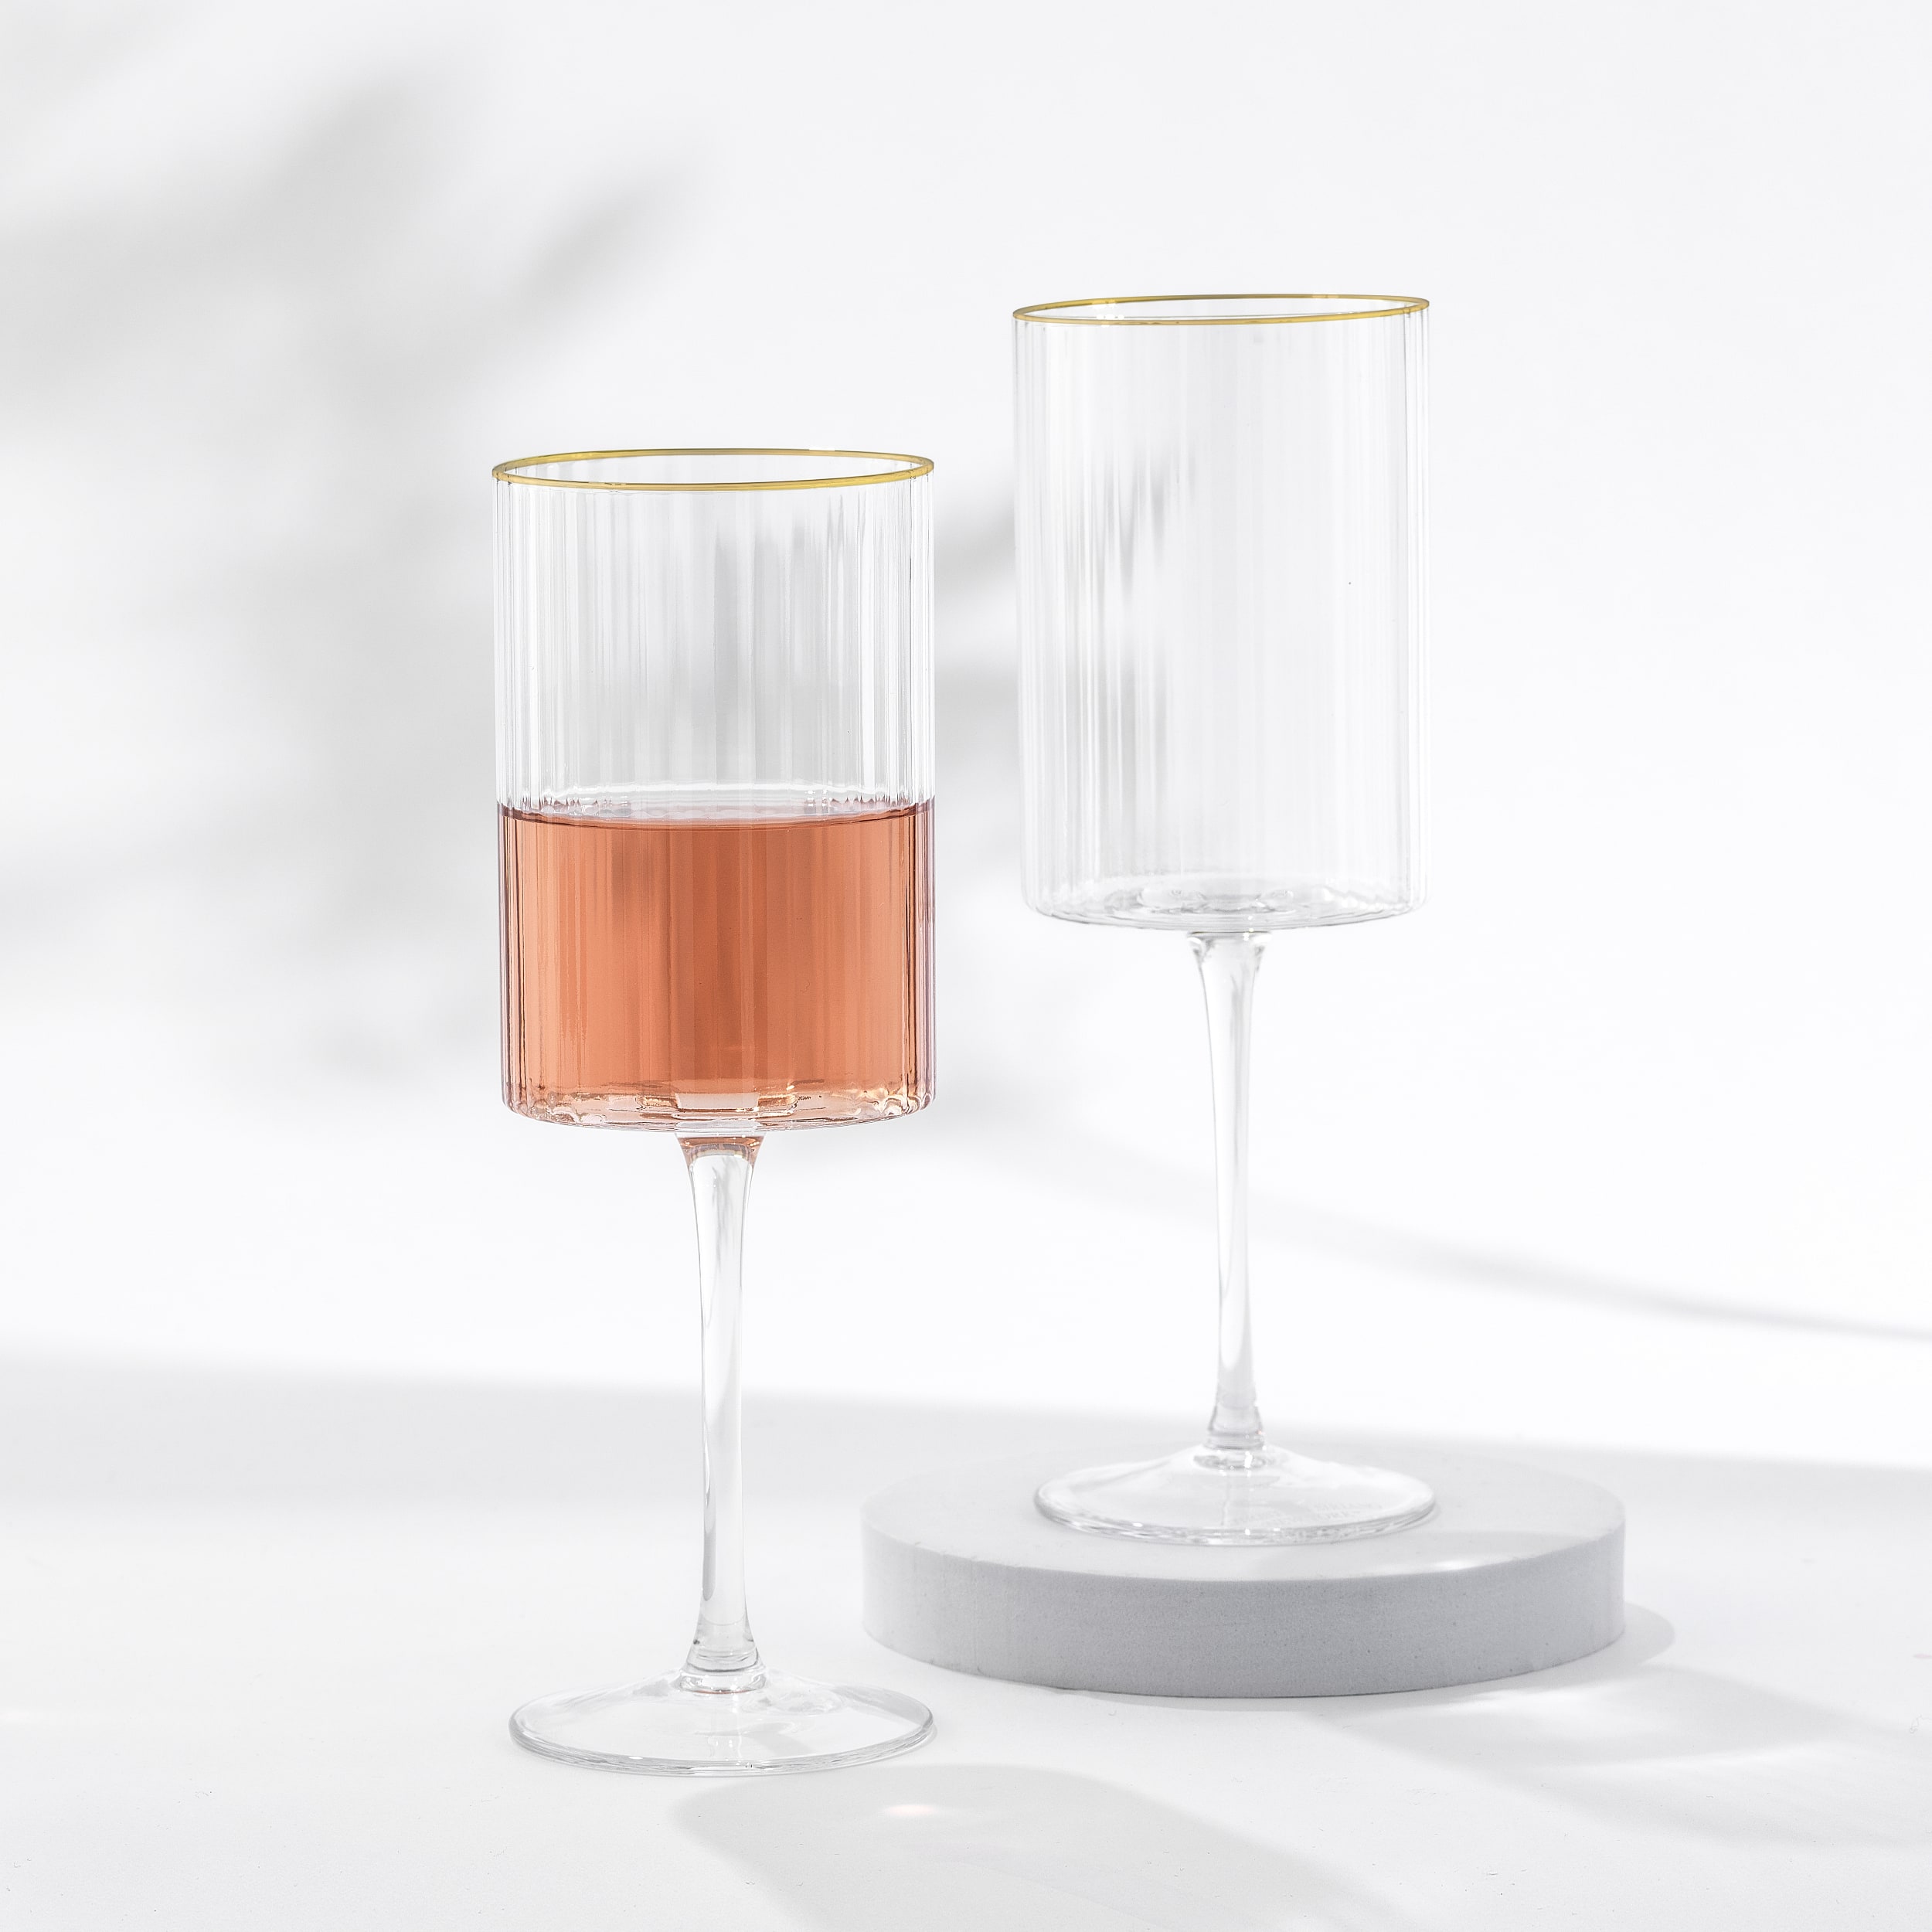 Joyjolt Christian Siriano New York Chroma Iridescent Red Wine Glass - 17.5  Oz - Set Of 2 : Target